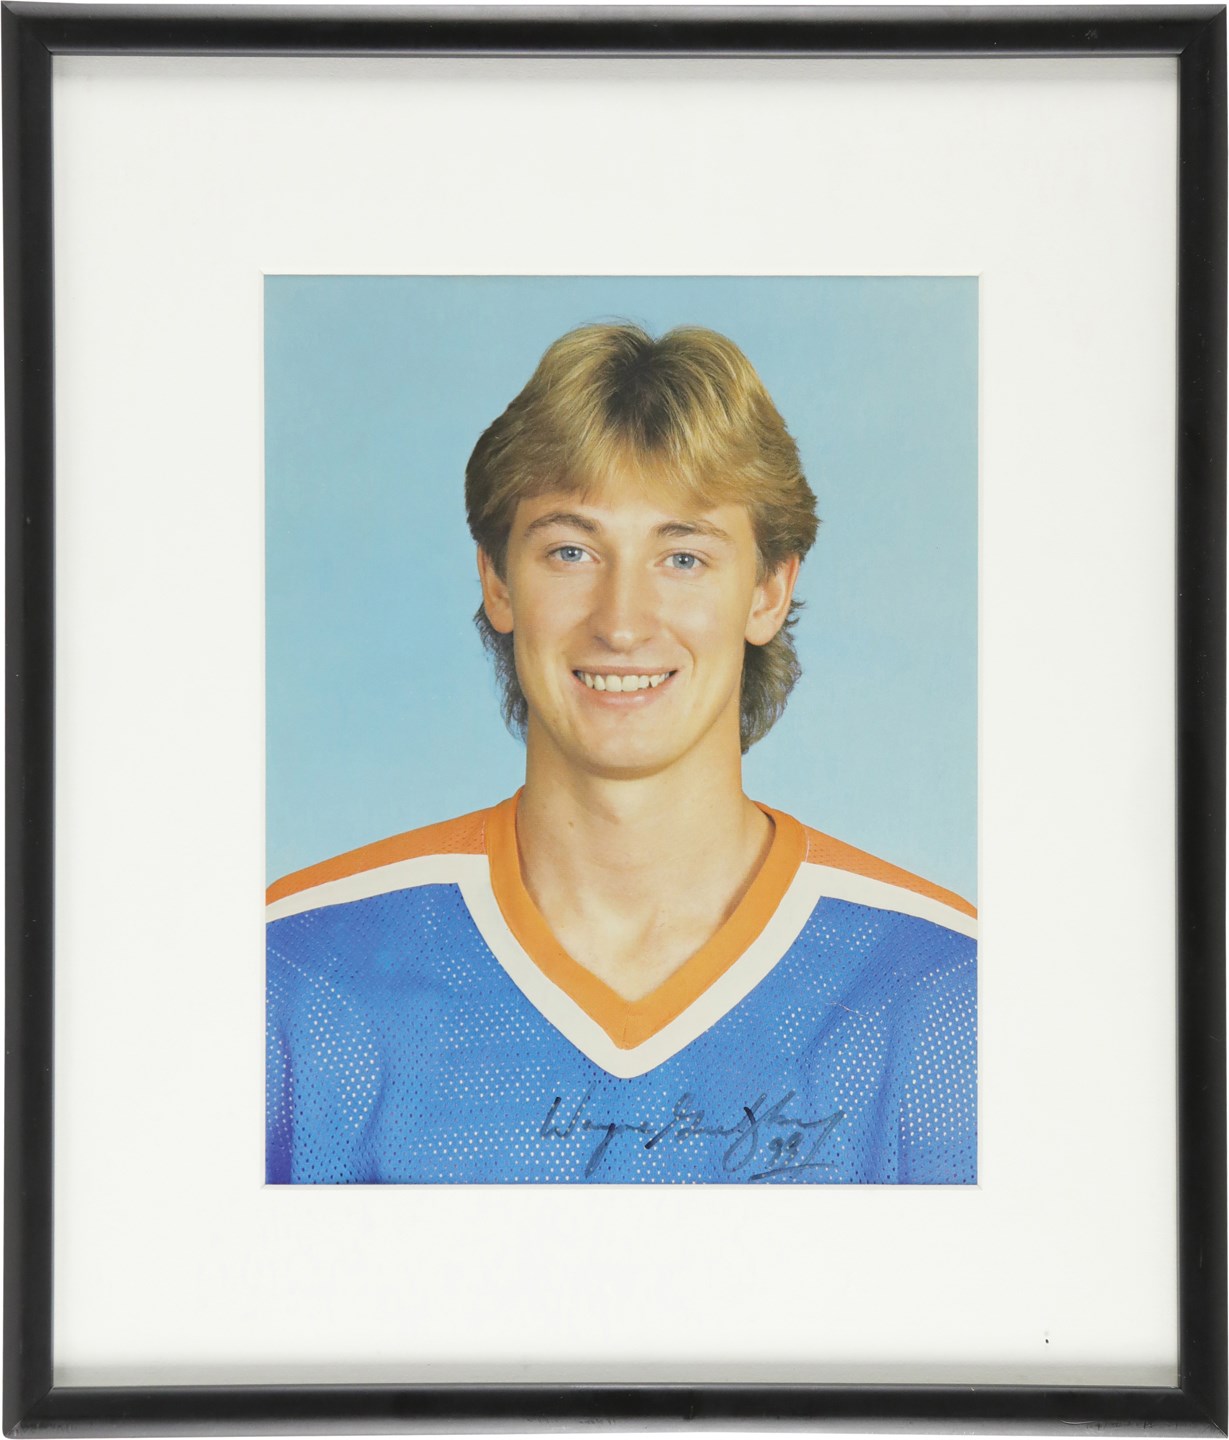 - Wayne Gretzky Rookie Era Signed Photograph (PSA)